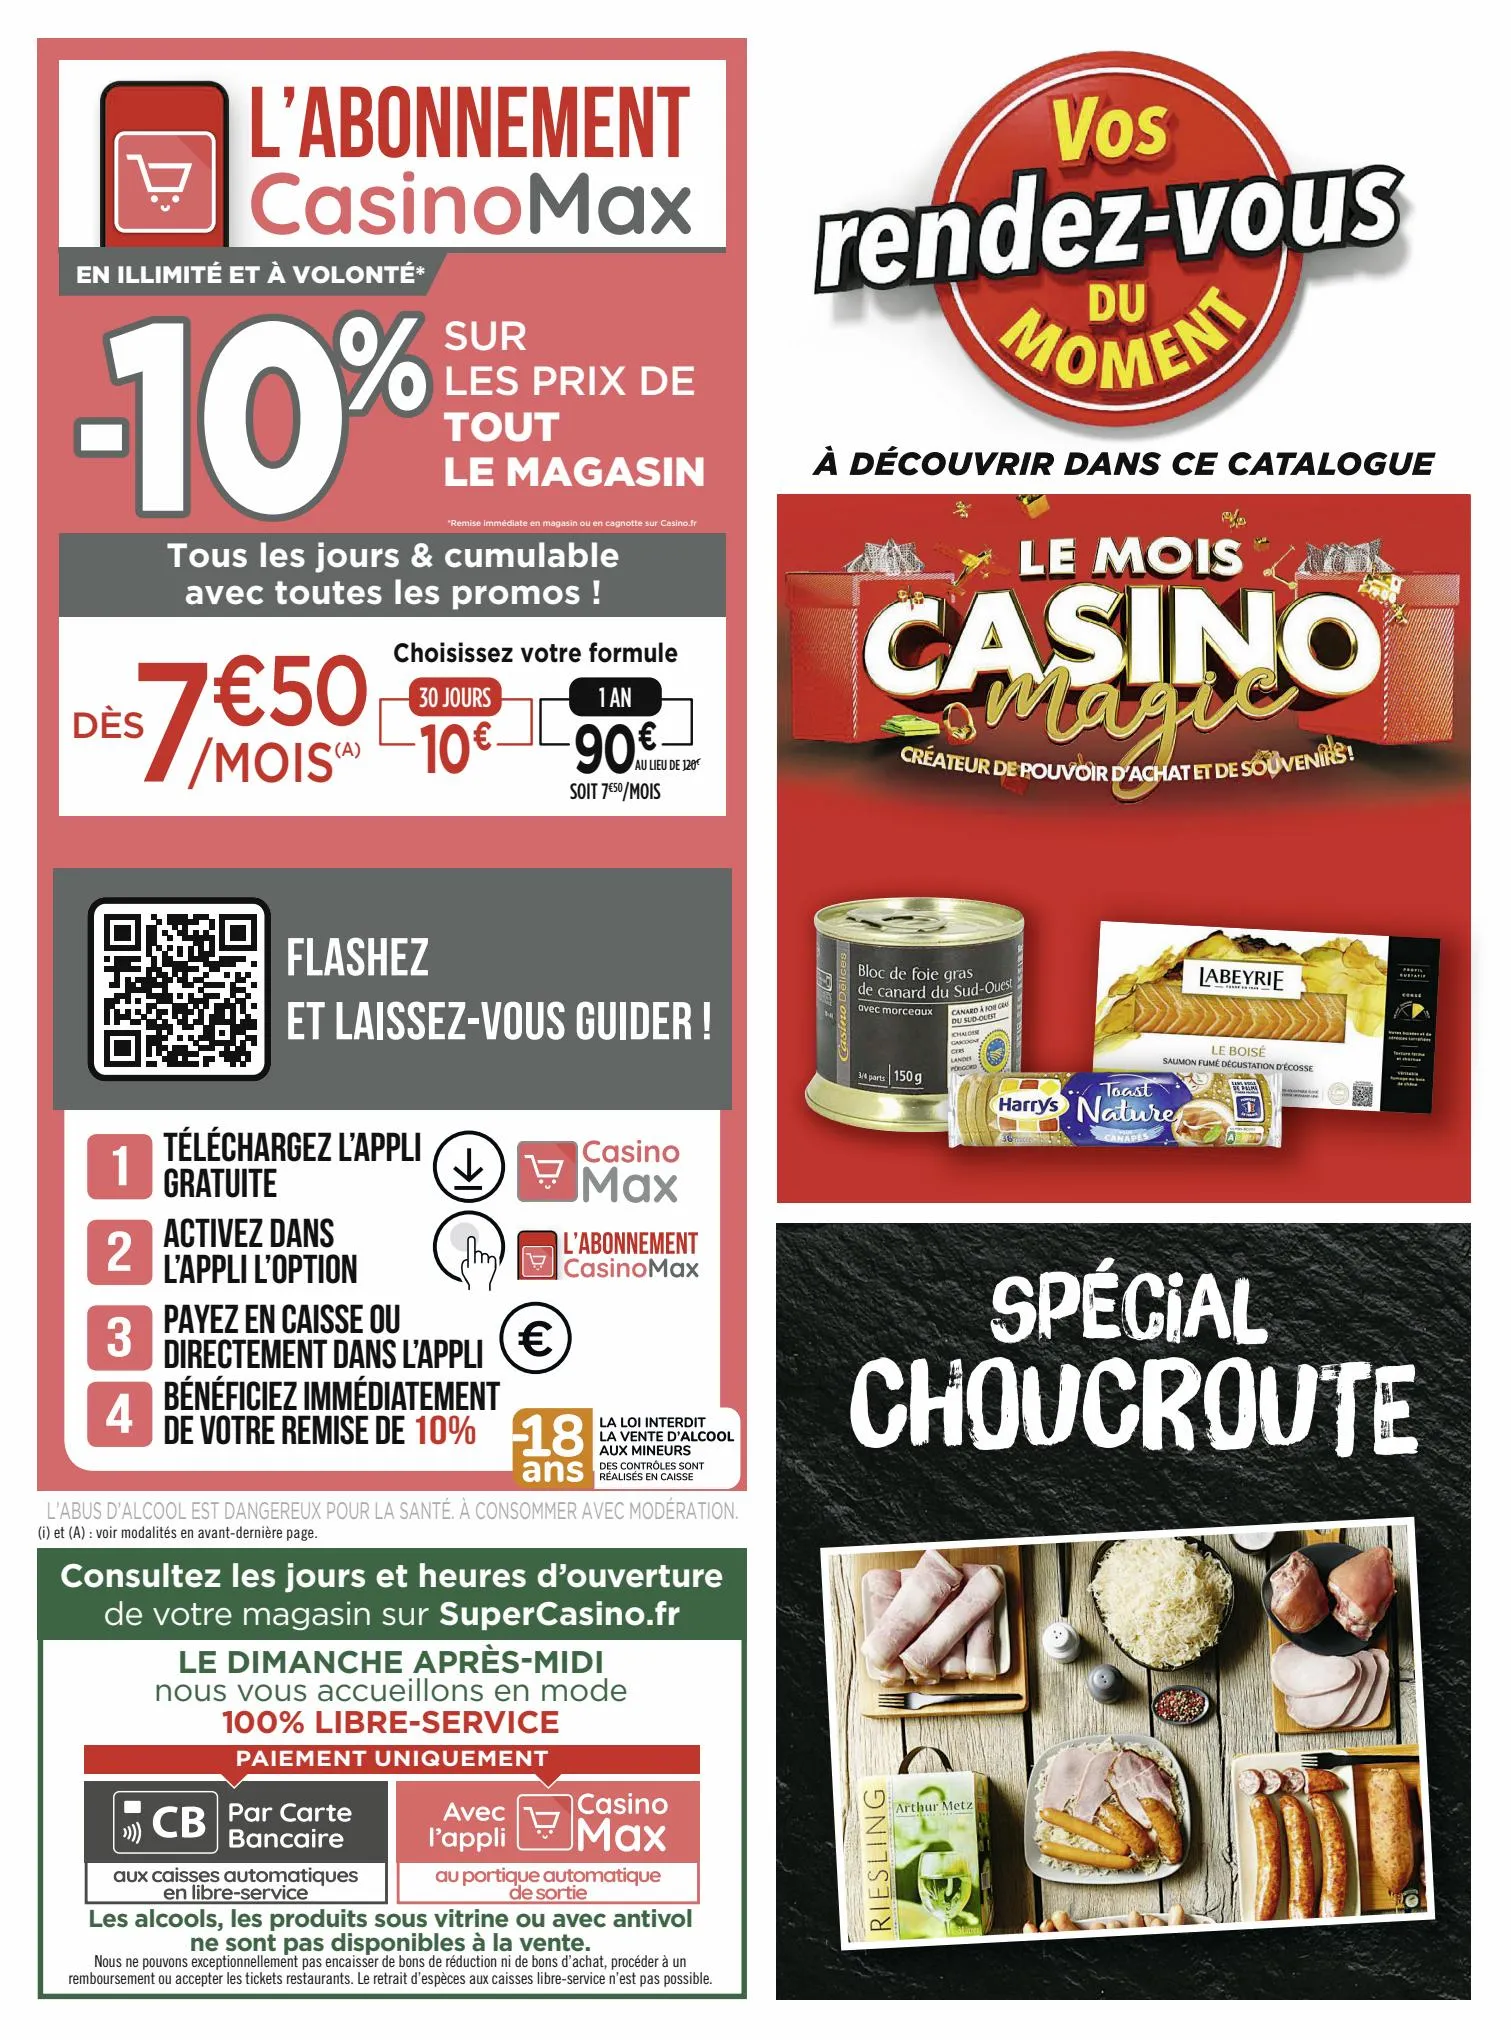 Catalogue Le mois Casino Magic, page 00002